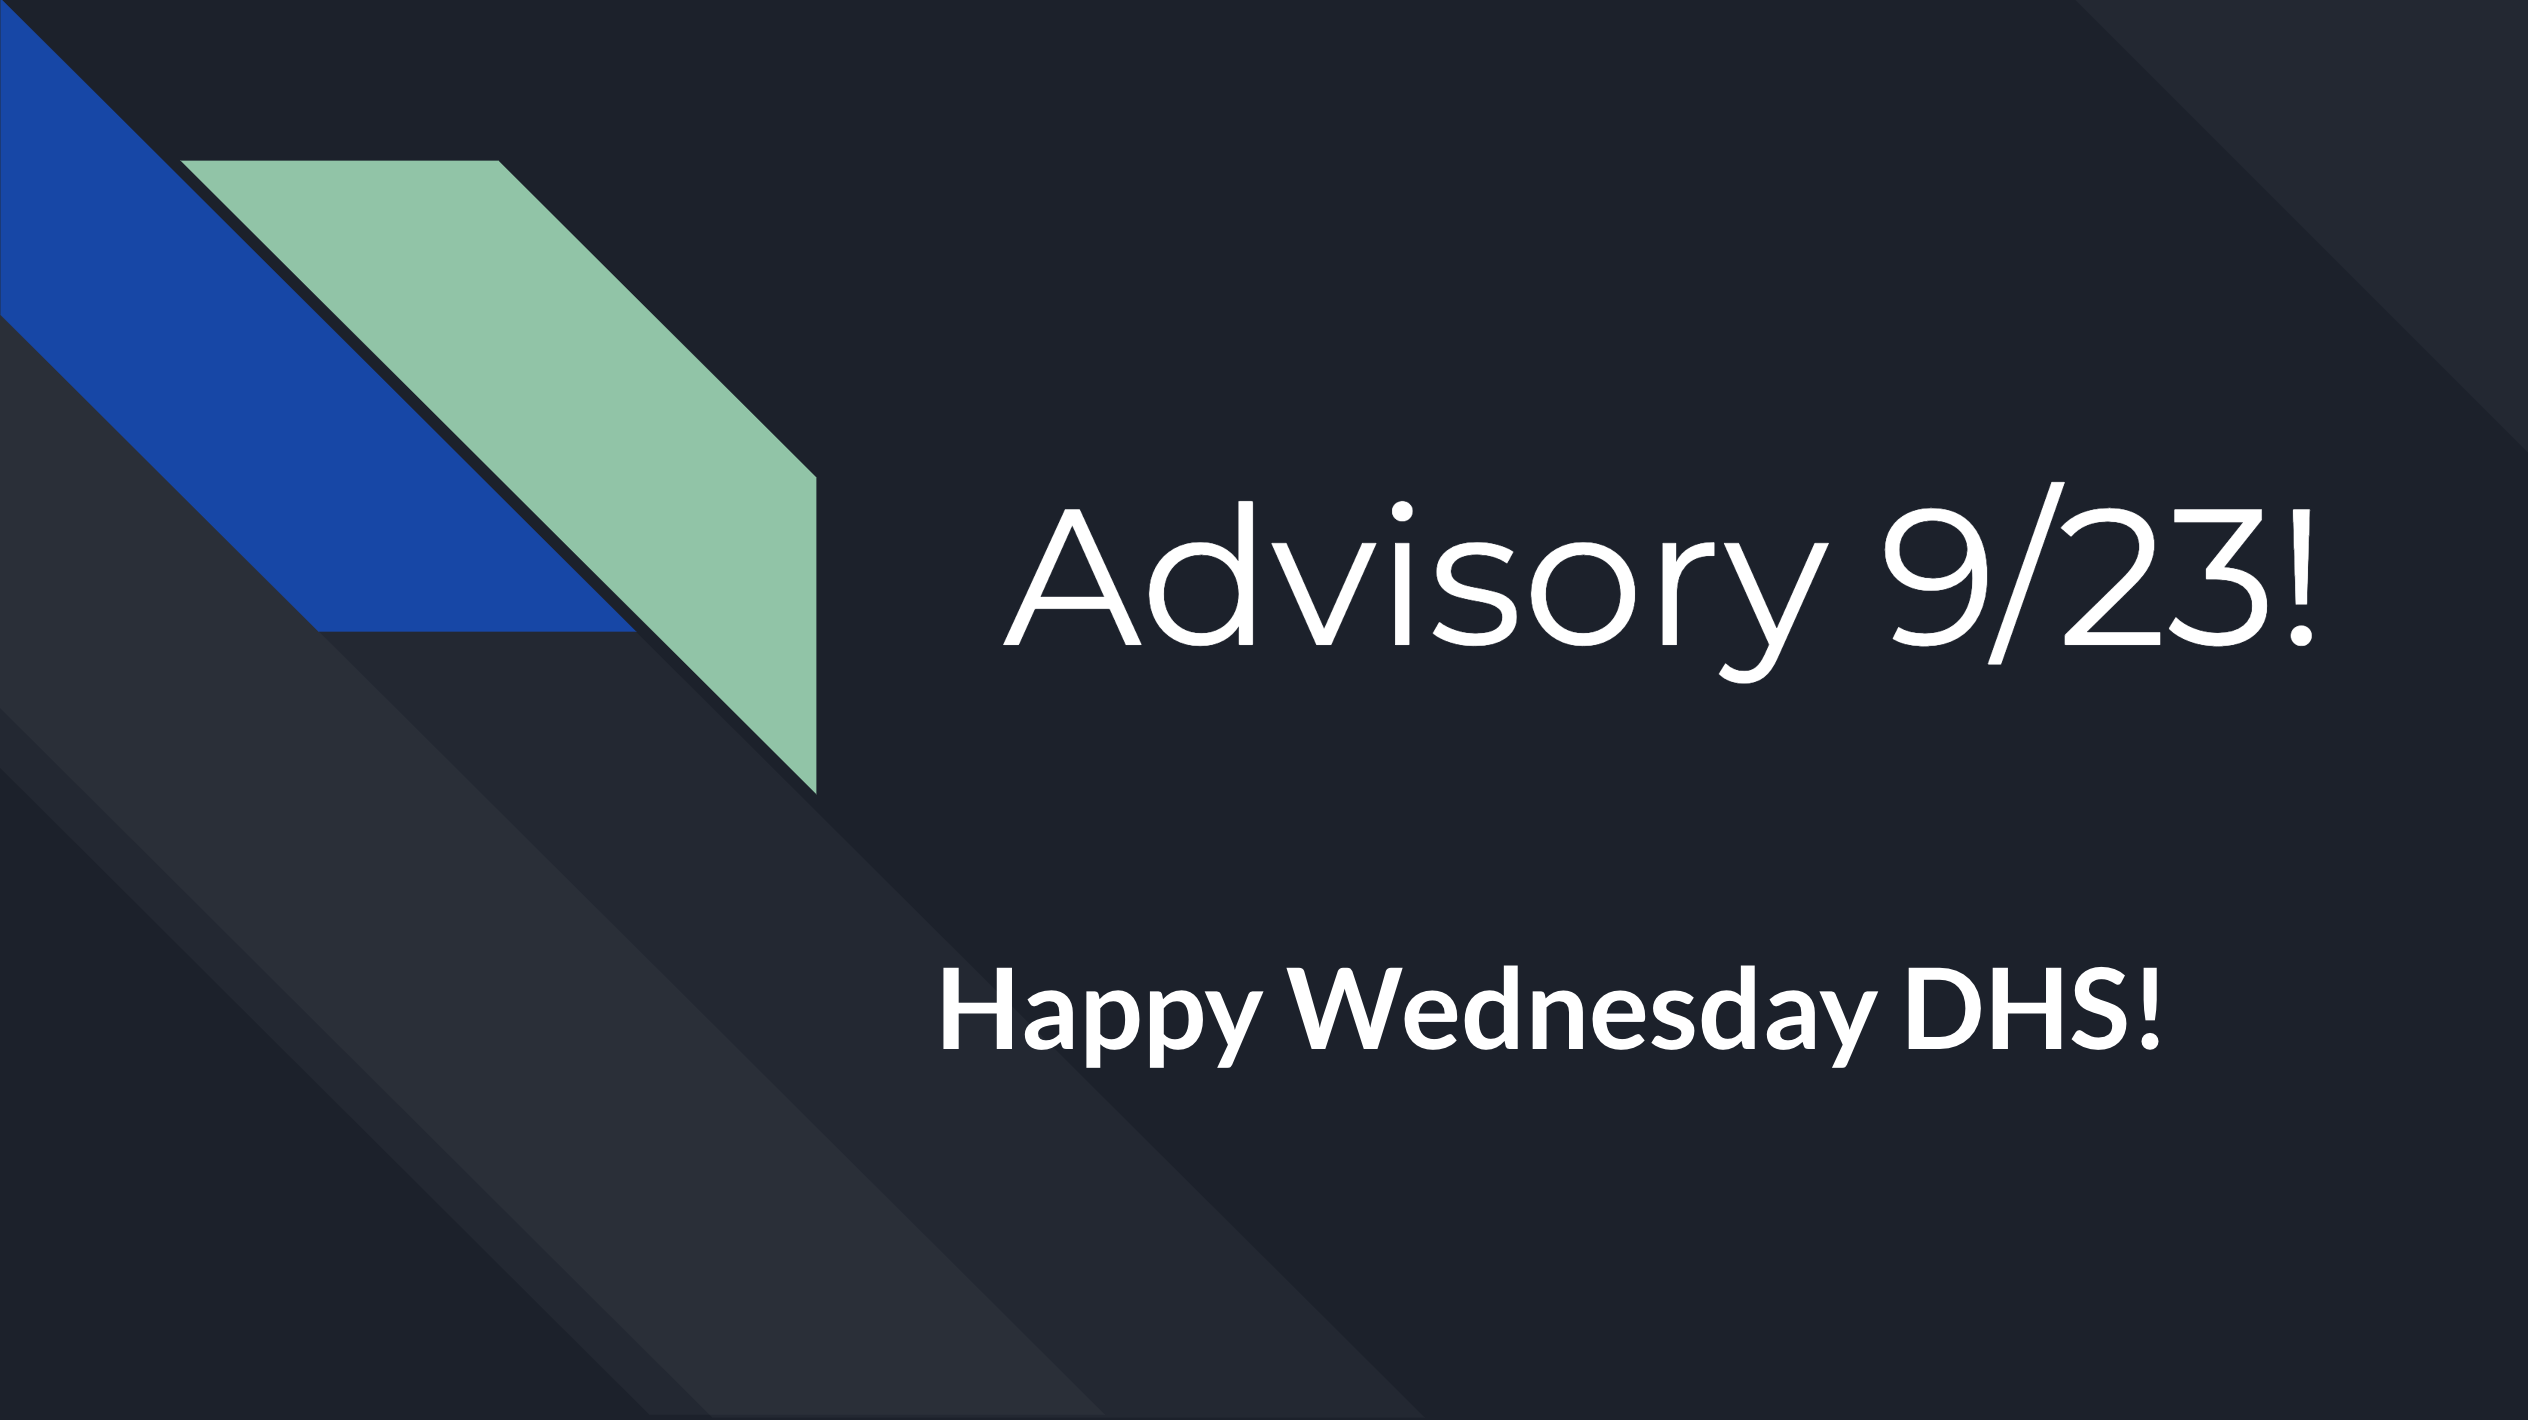 Intro slide to advisory period reading "Advisory 9/23! Happy Wednesday DHS"